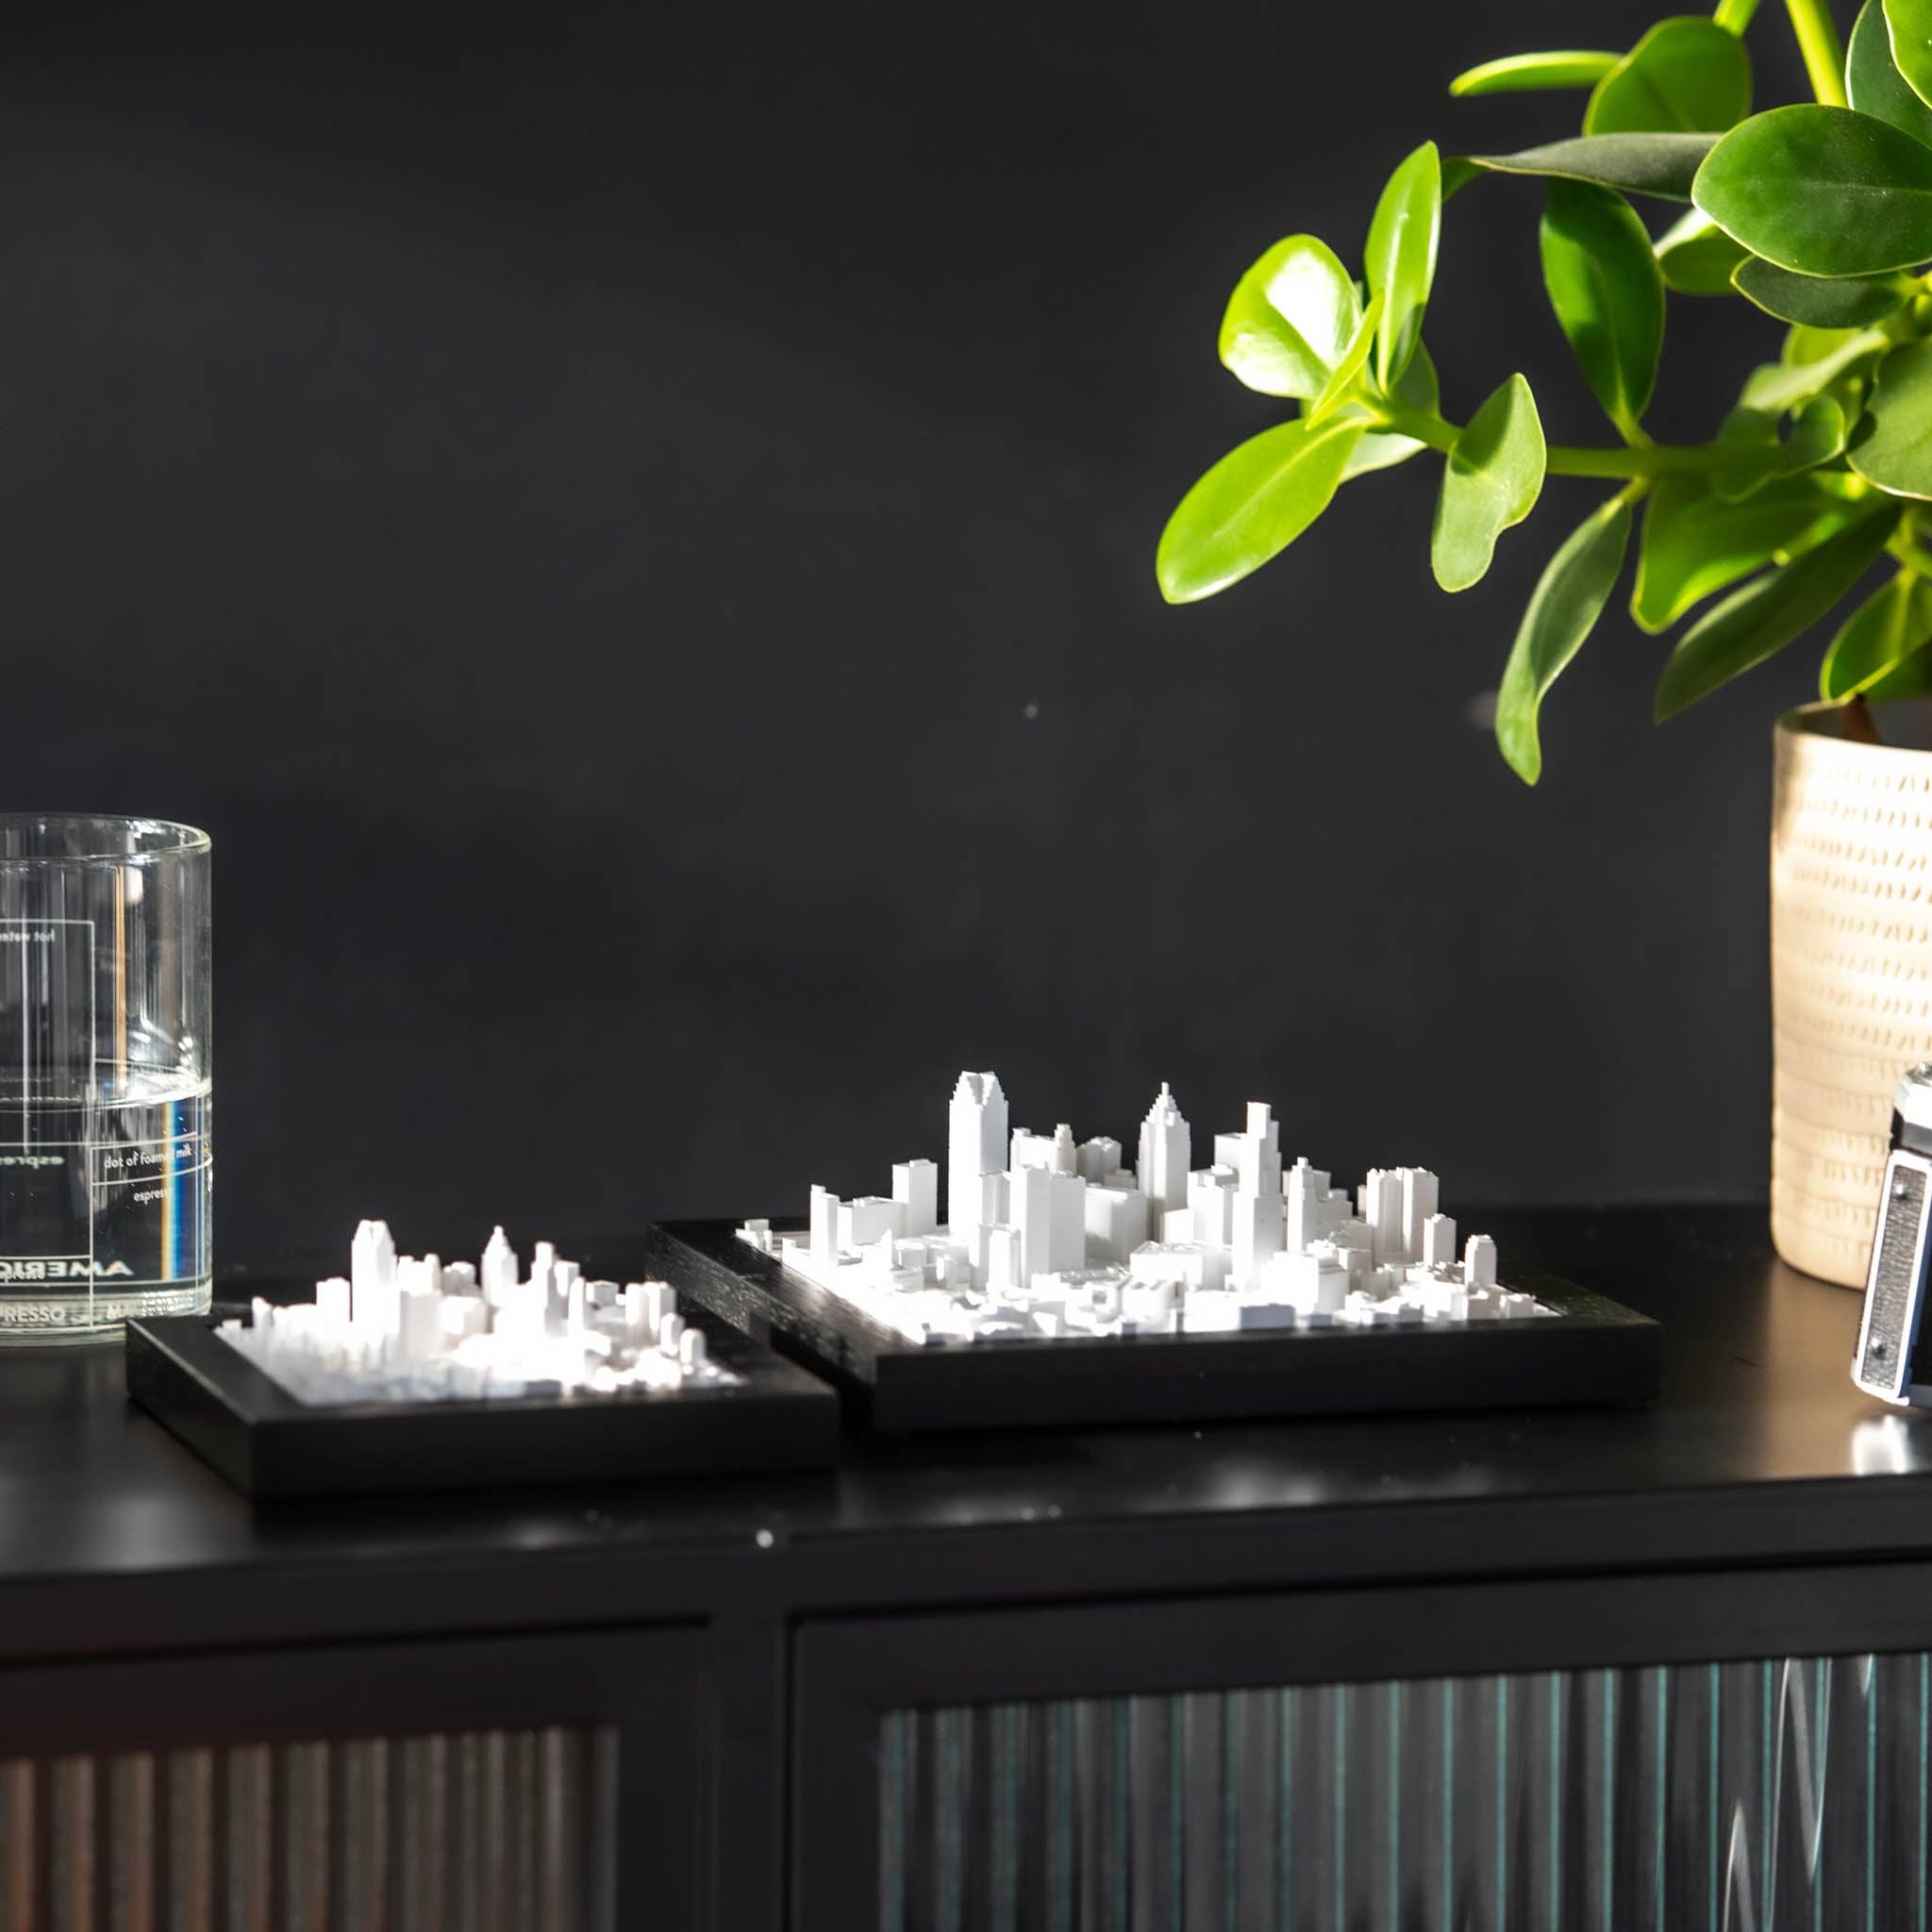 Detroit 3D City Model America, Cube - CITYFRAMES